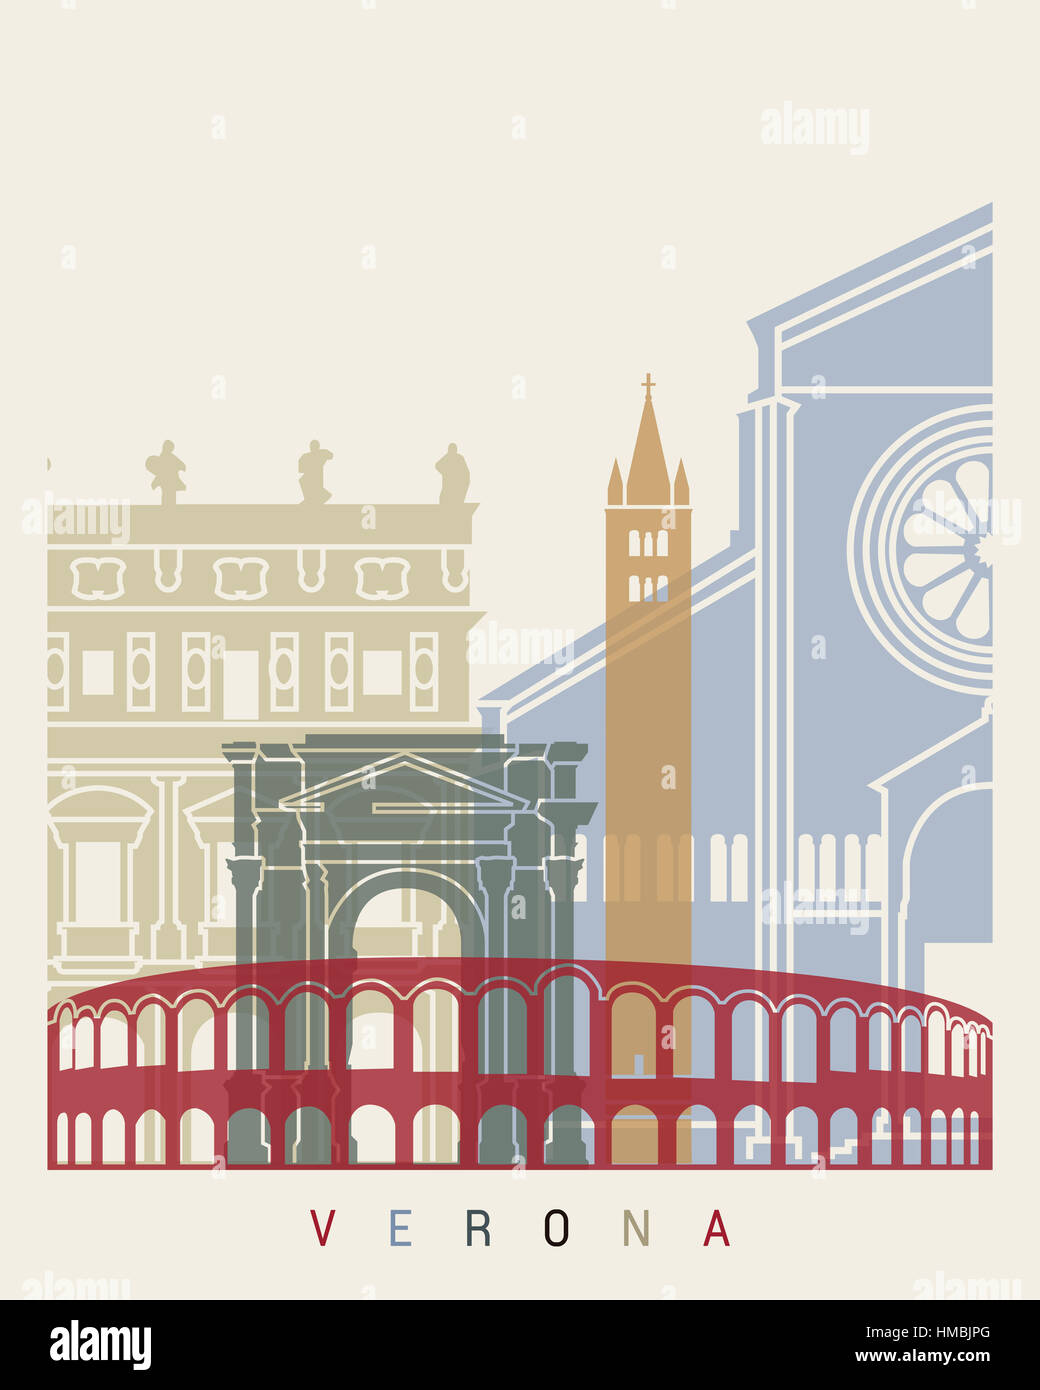 Verona skyline poster in editable vector file Stock Photo